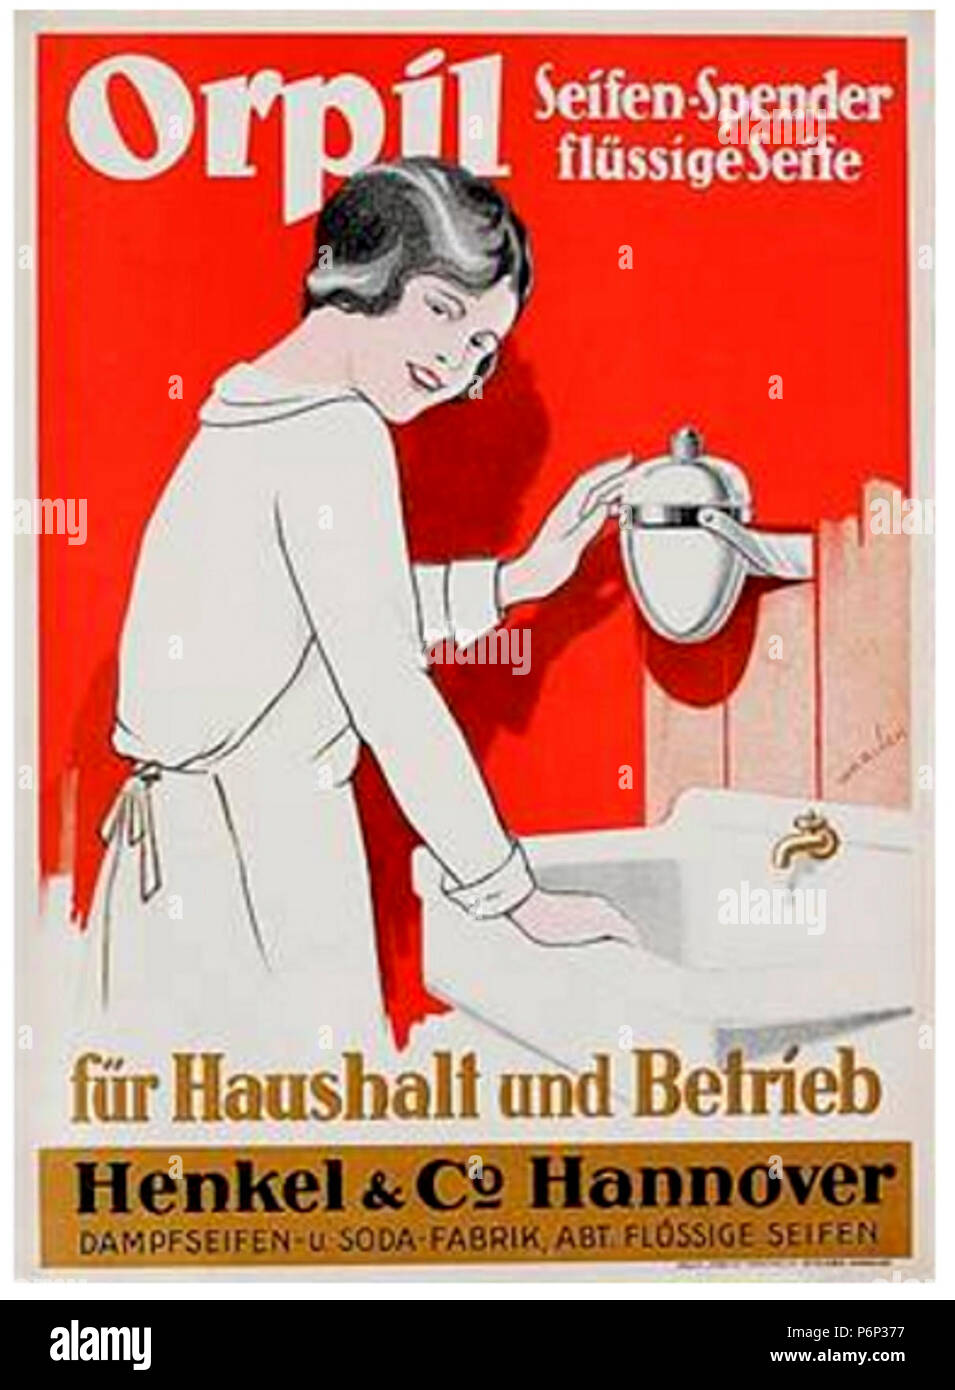 1920 circa Plakat Orpil Seifen-Spender flüssige Seife Henkel & Co. Hannover. Stock Photo